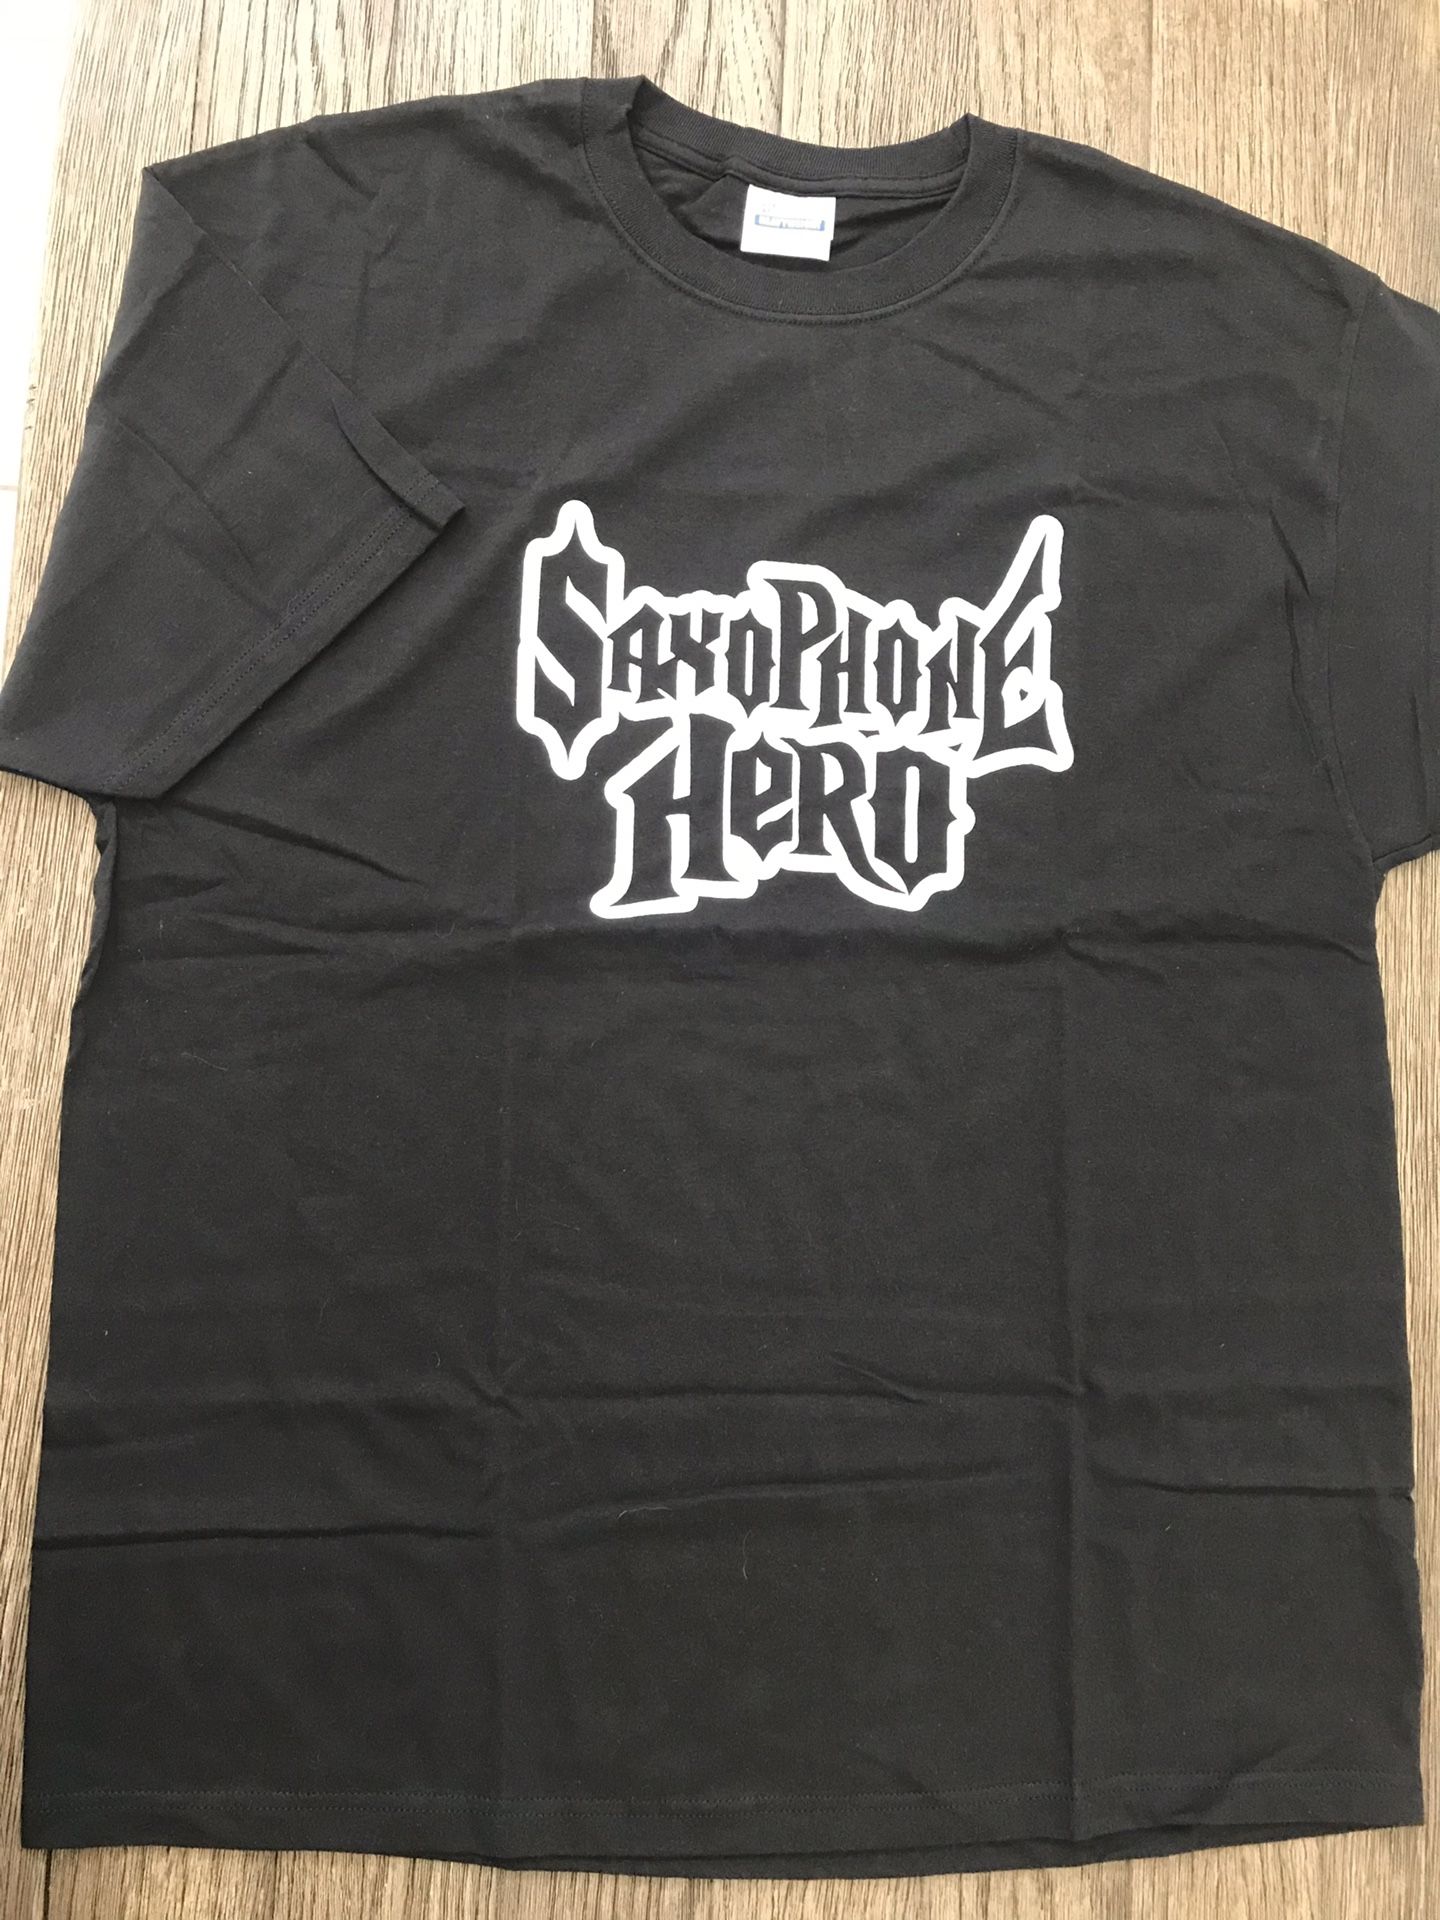 NEW Saxophone Hero T-Shirt Adult Sizes: XL-L-M-S